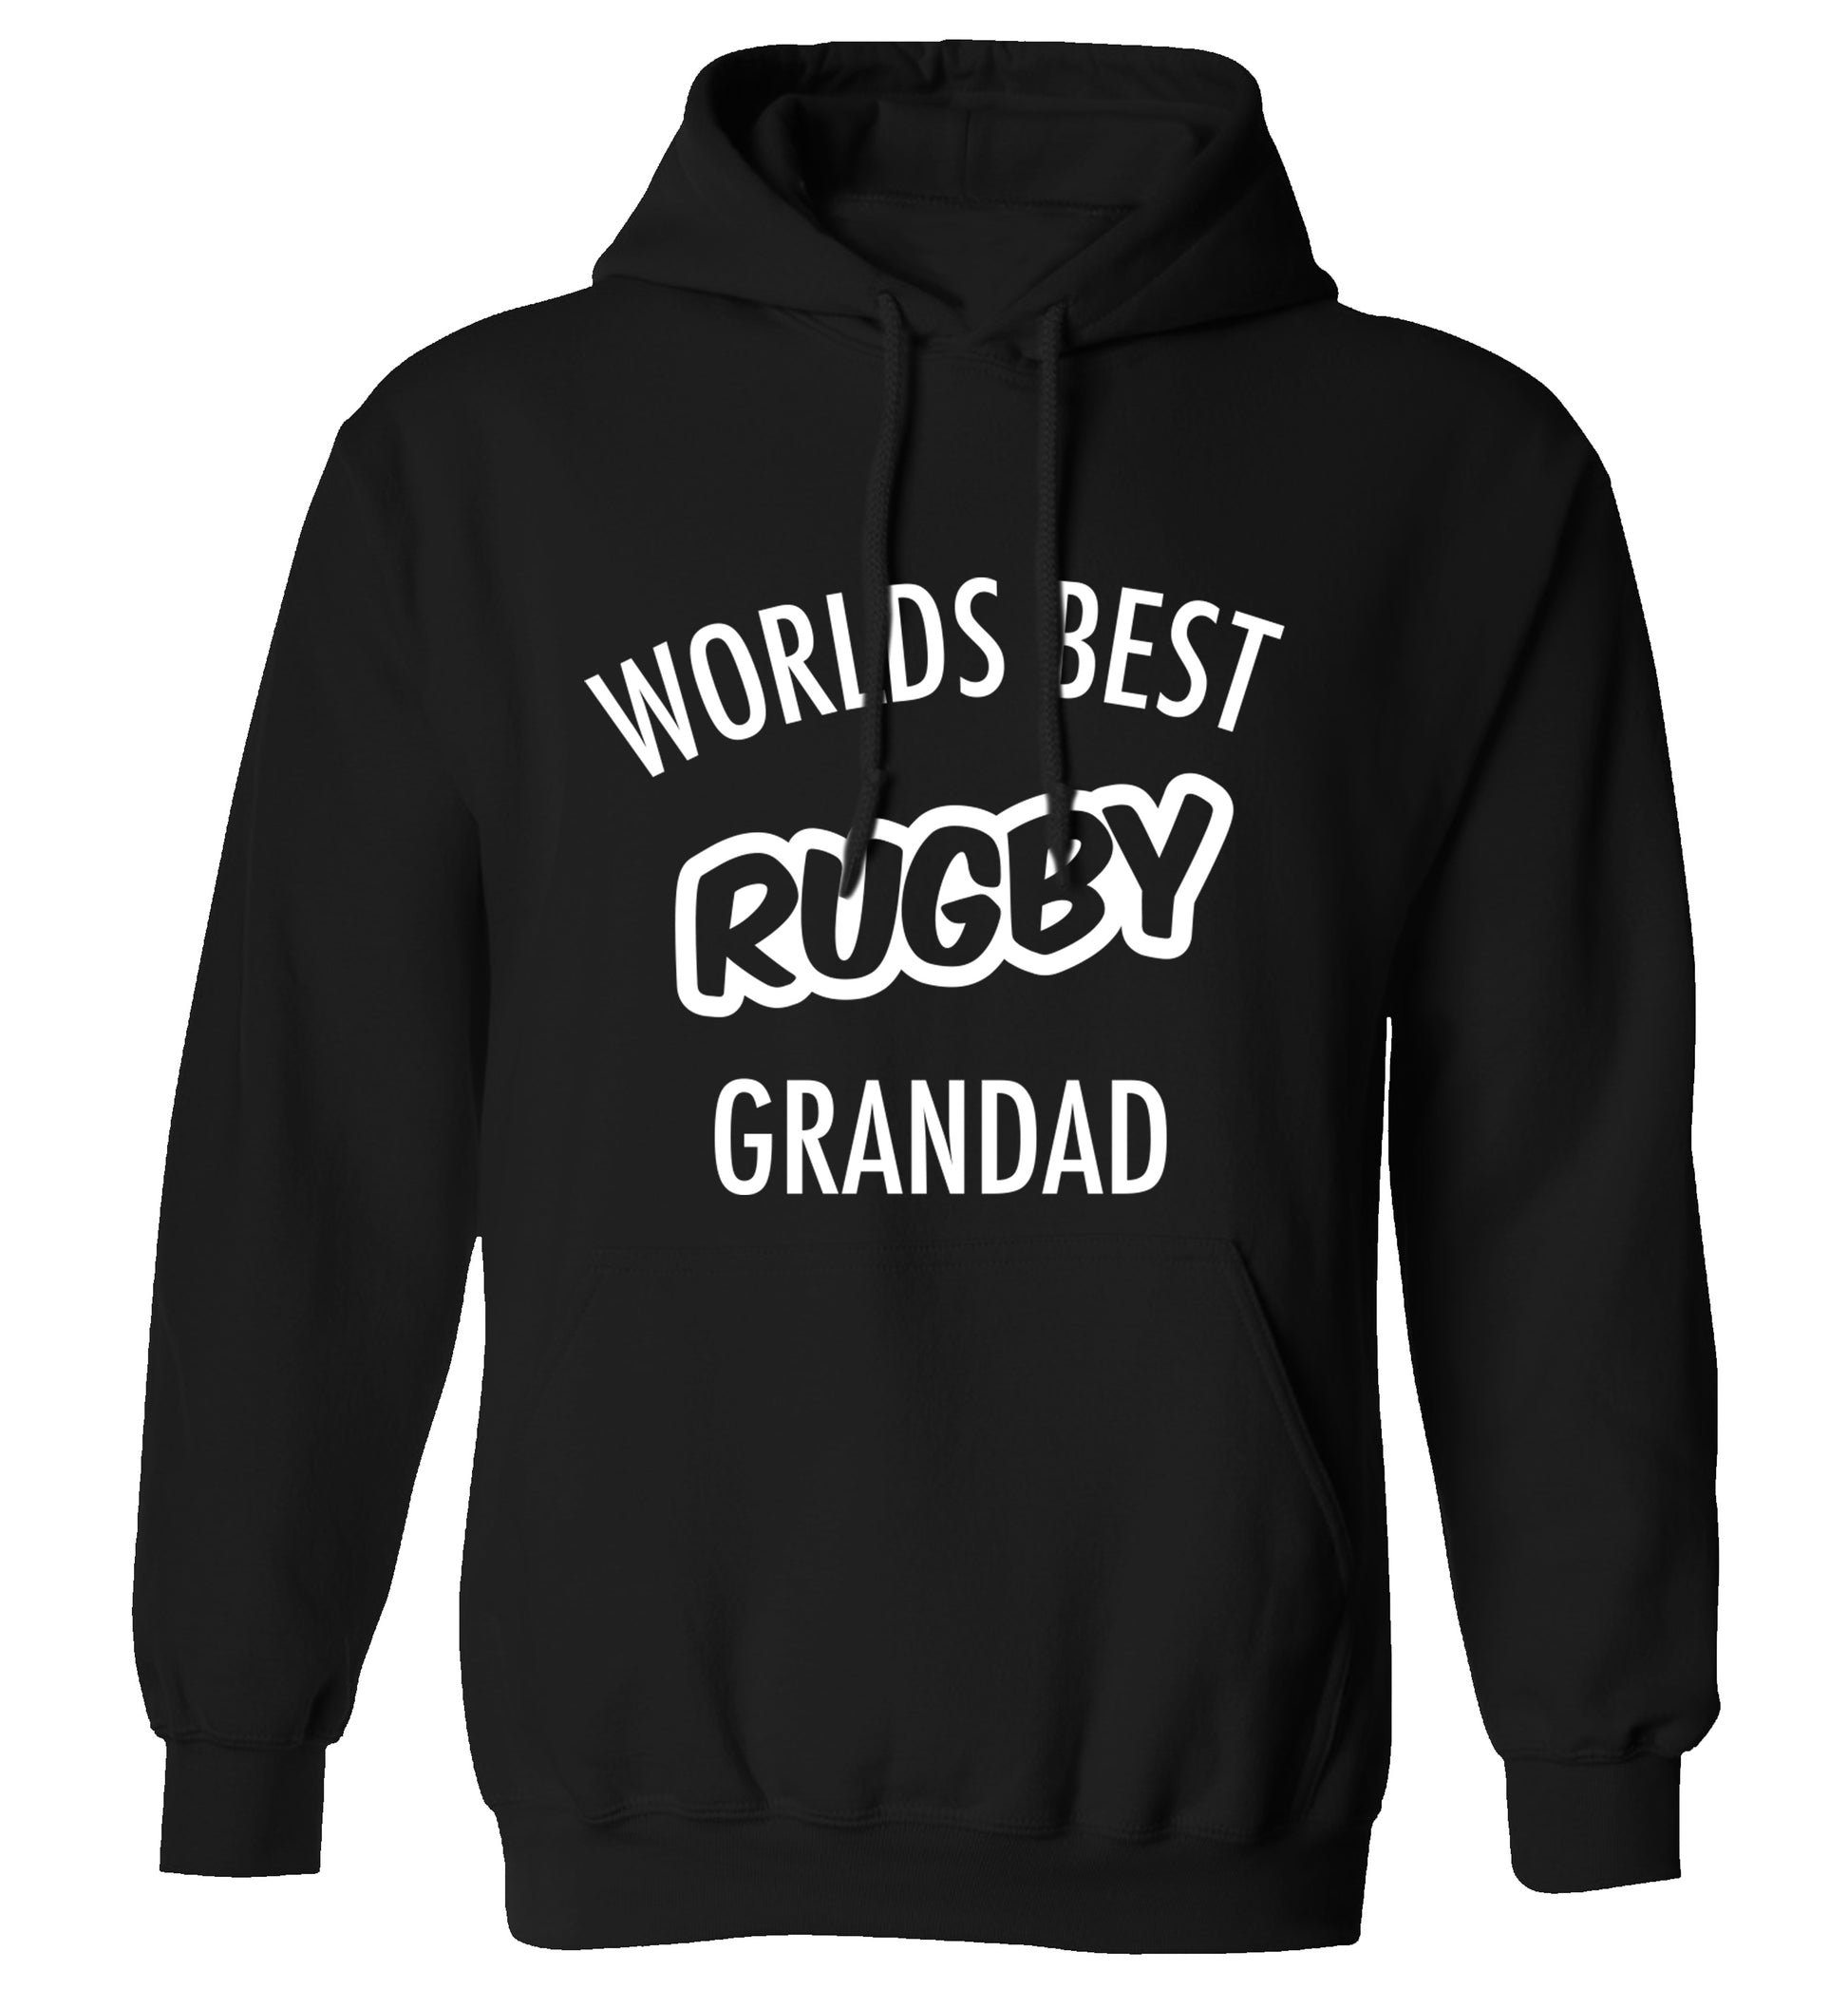 Worlds best rugby grandad adults unisex black hoodie 2XL